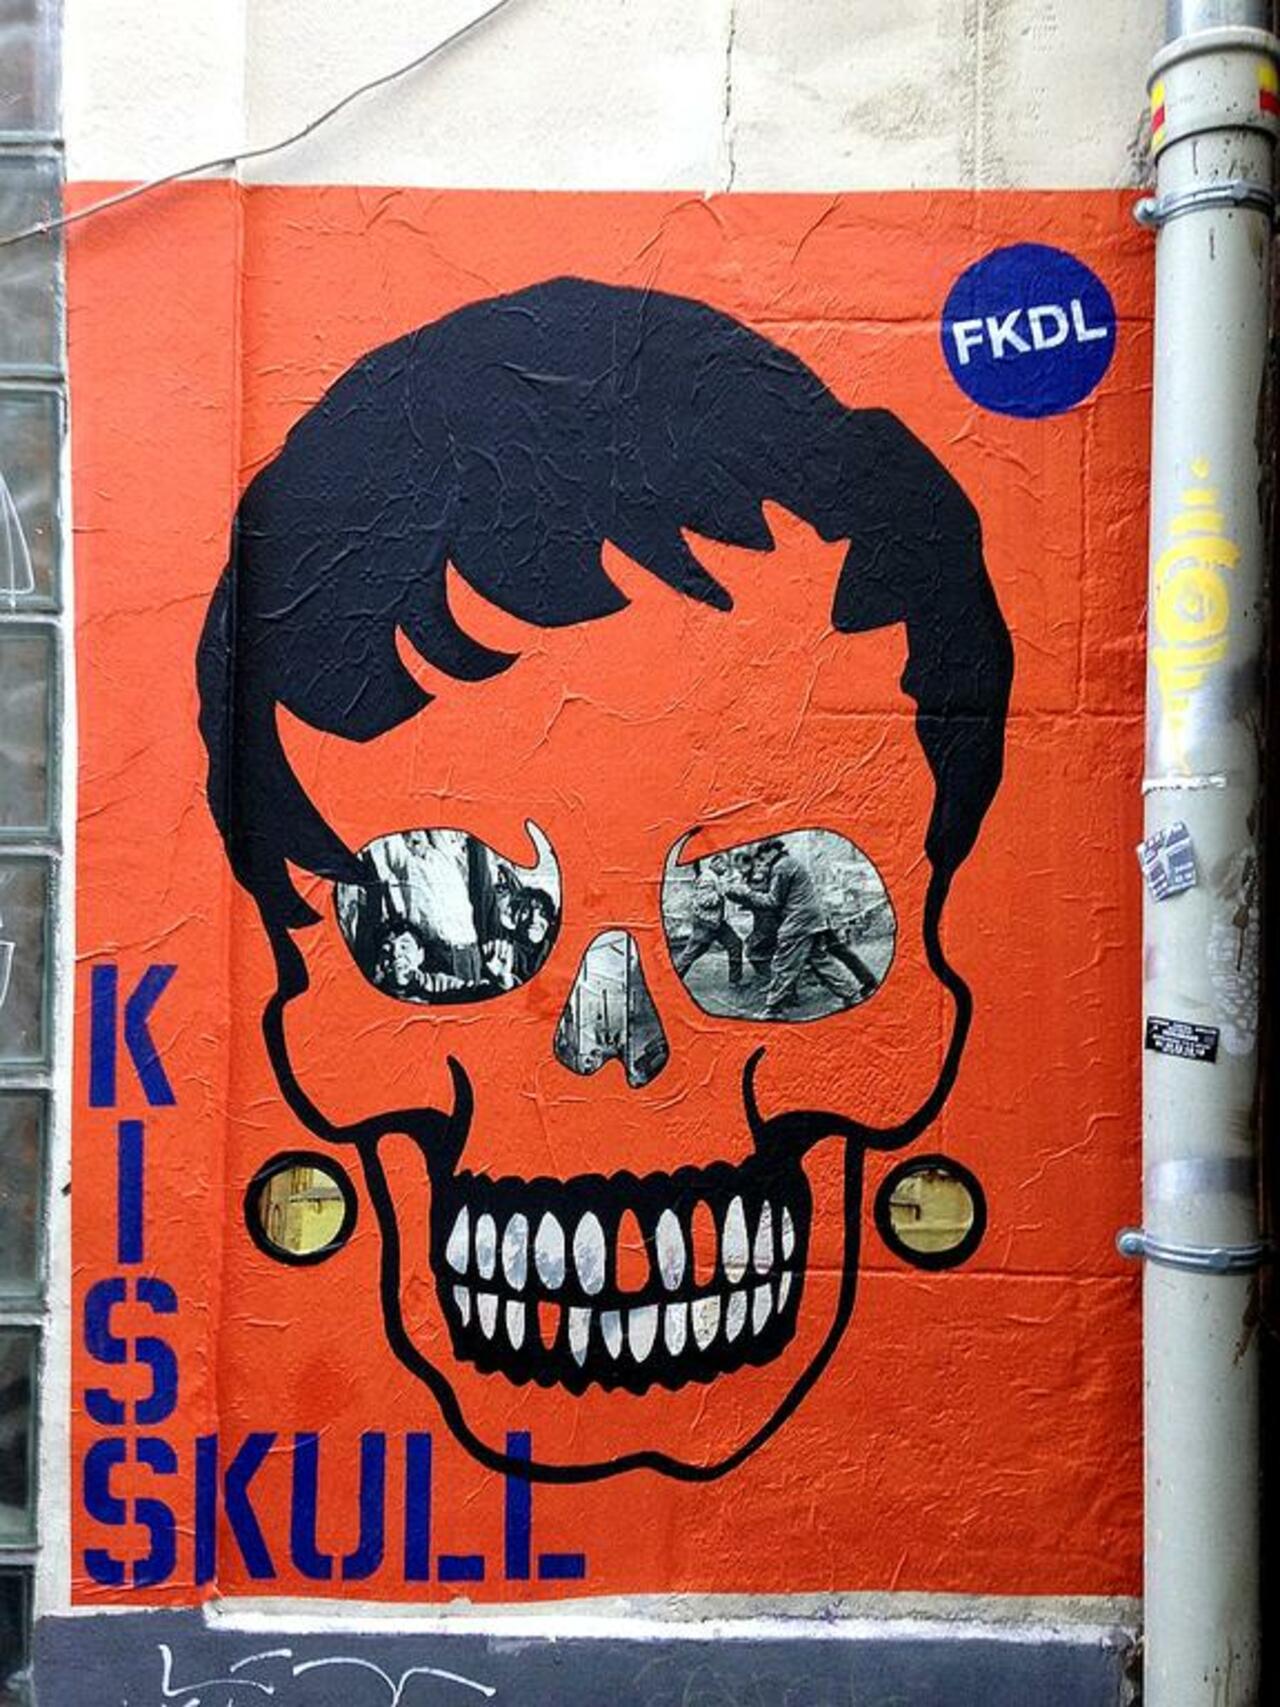 RT @urbacolors: Street Art by FKDL in #Paris http://www.urbacolors.com #art #mural #graffiti #streetart https://t.co/KsP84AKGlO